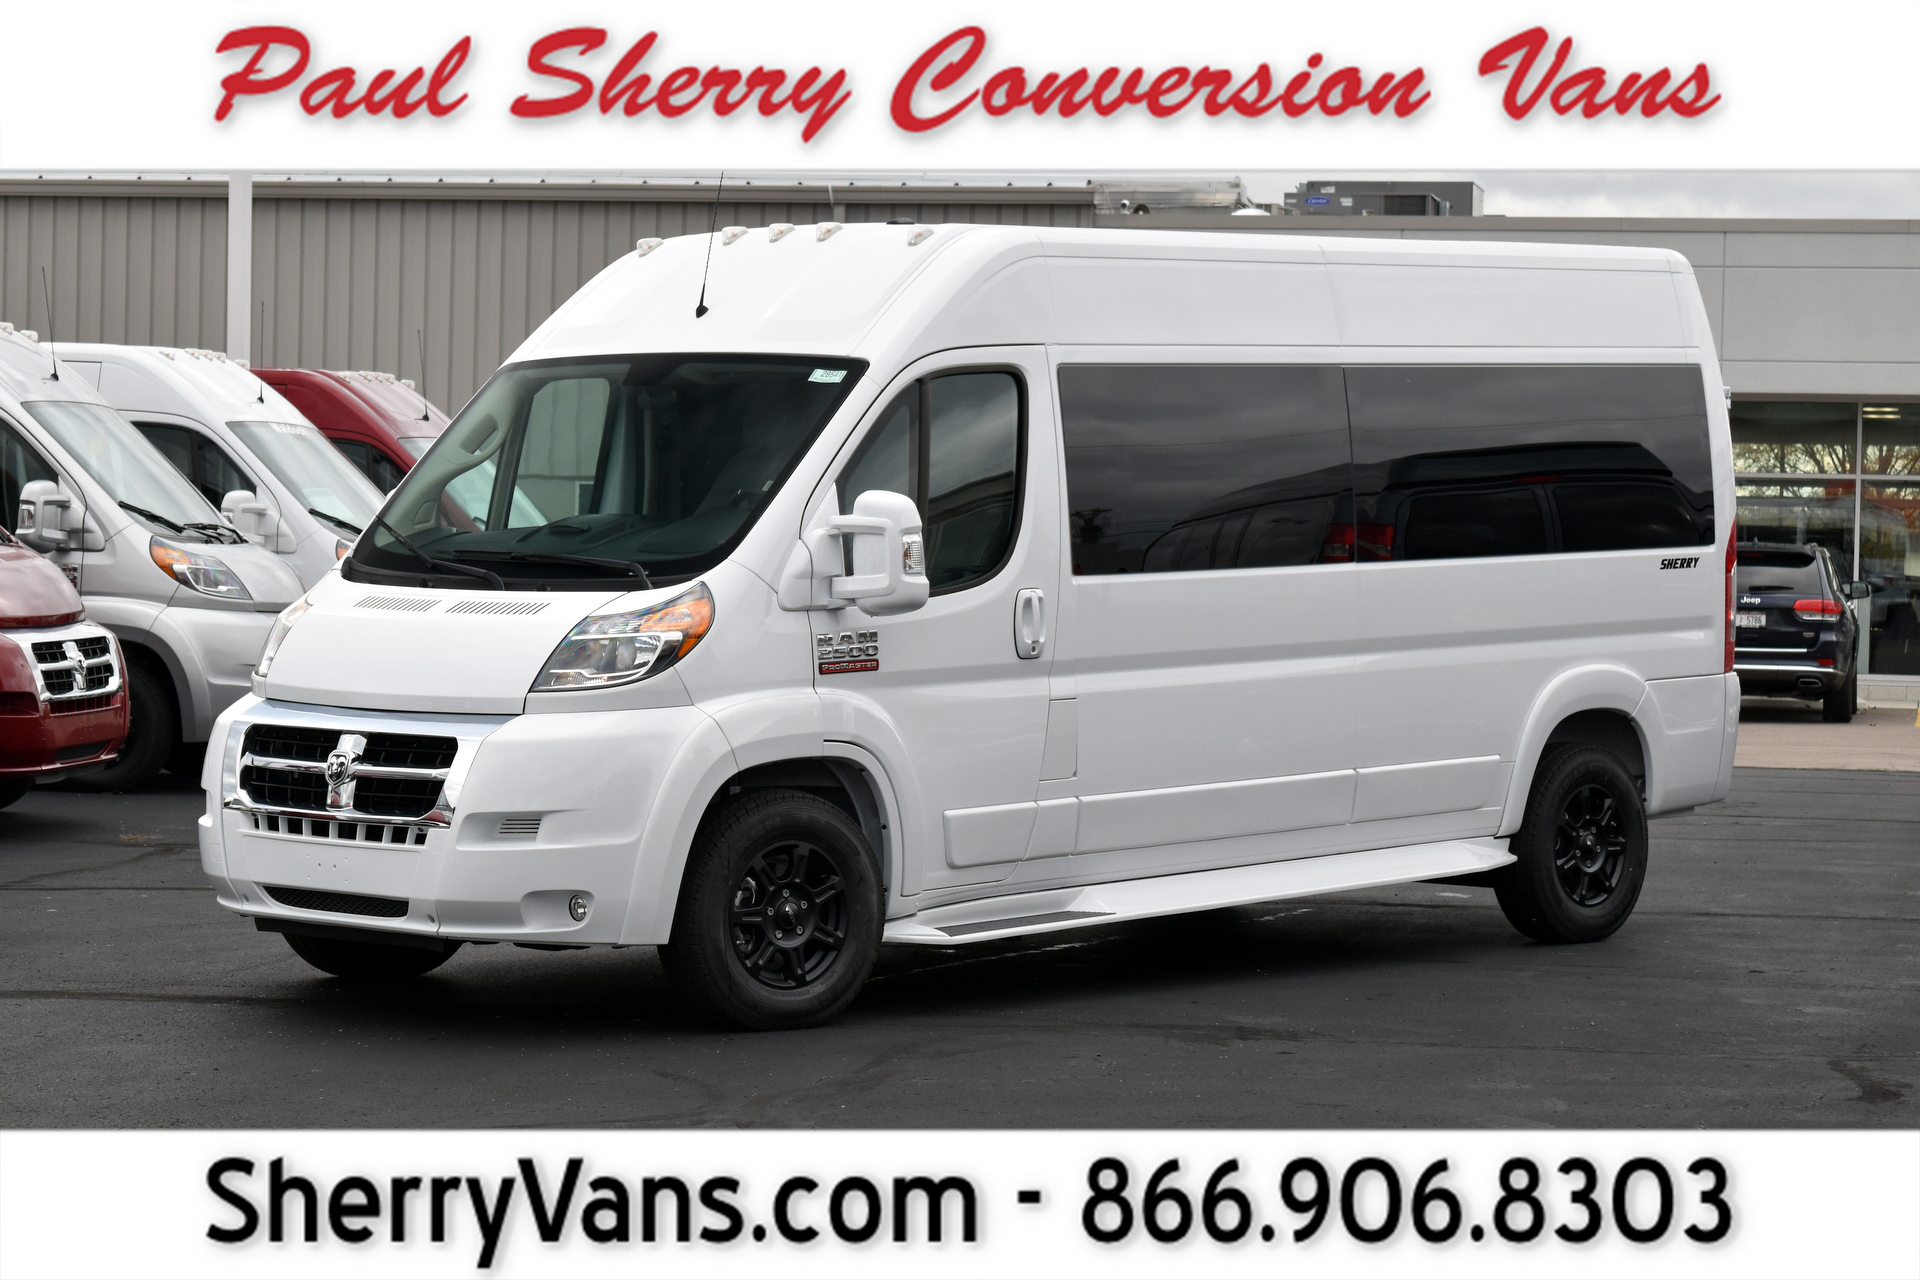 new gmc conversion vans